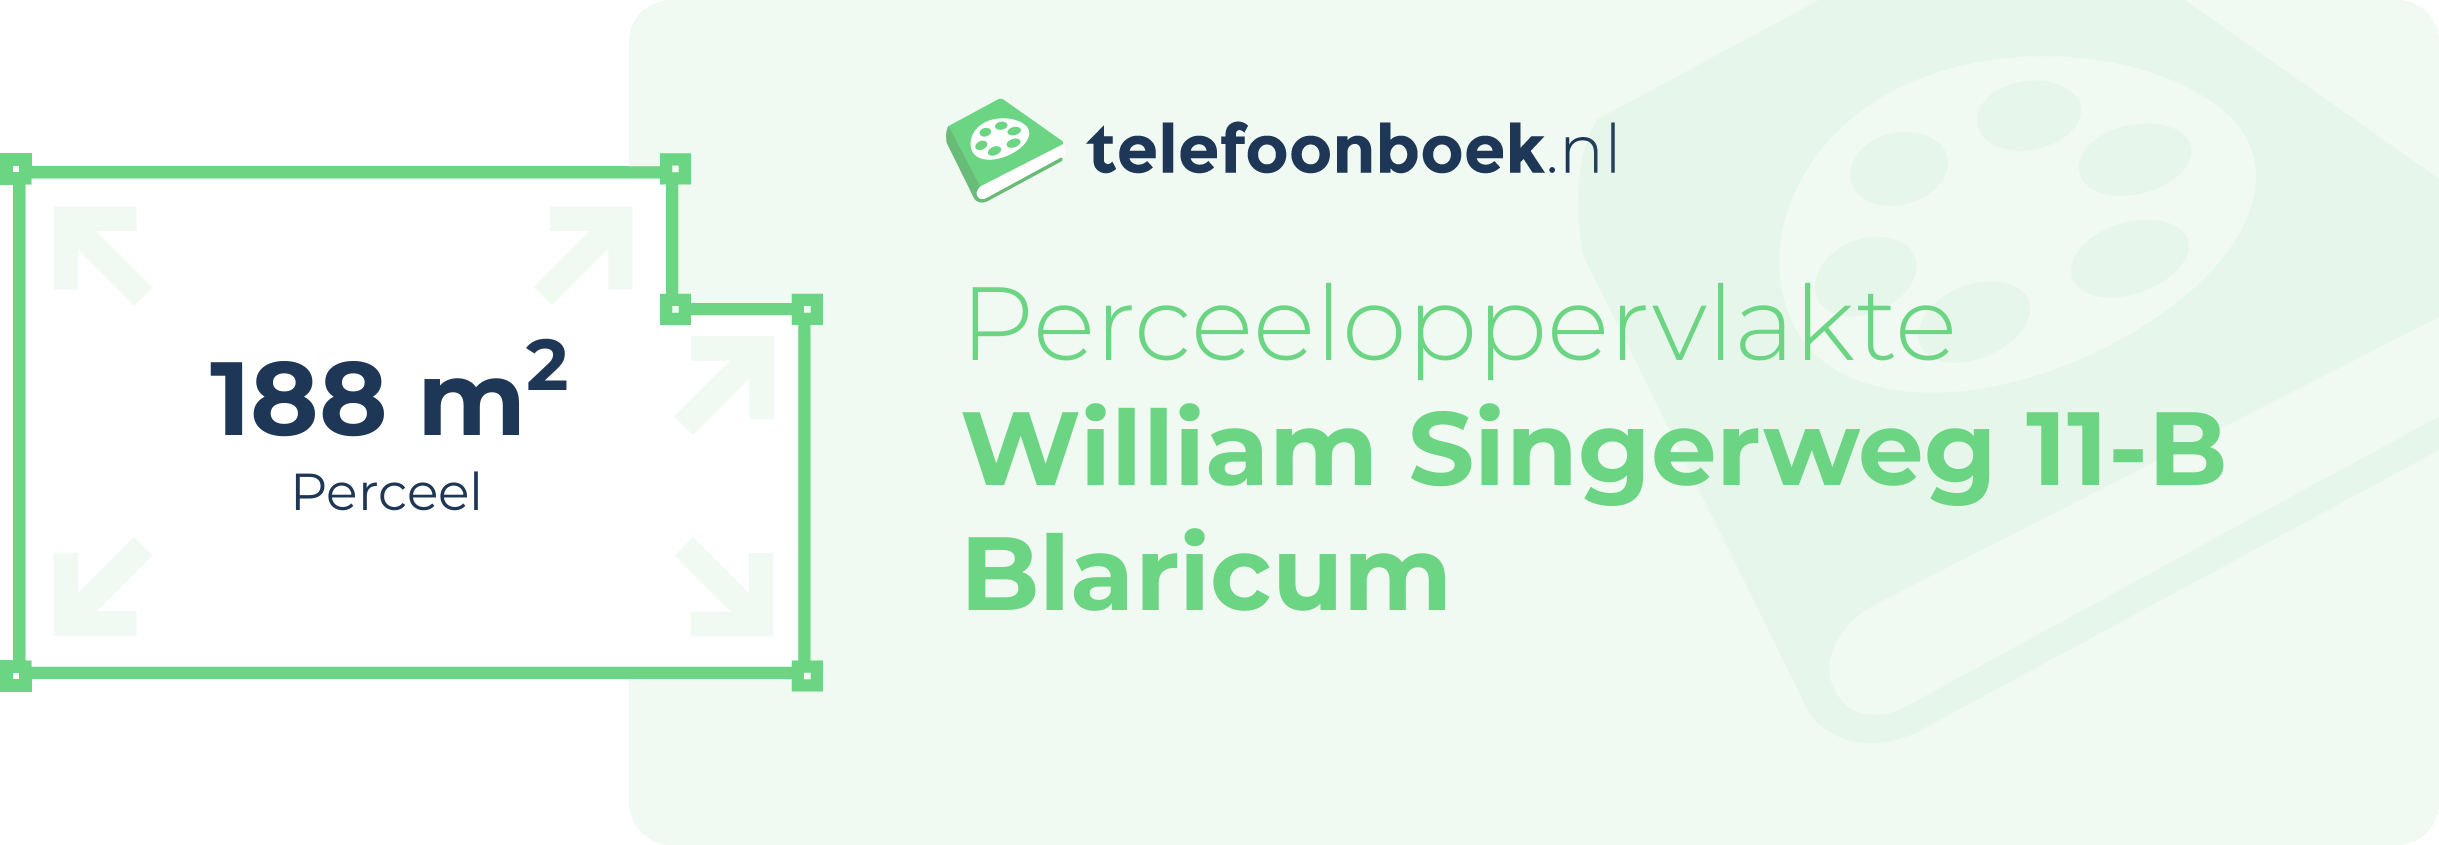 Perceeloppervlakte William Singerweg 11-B Blaricum